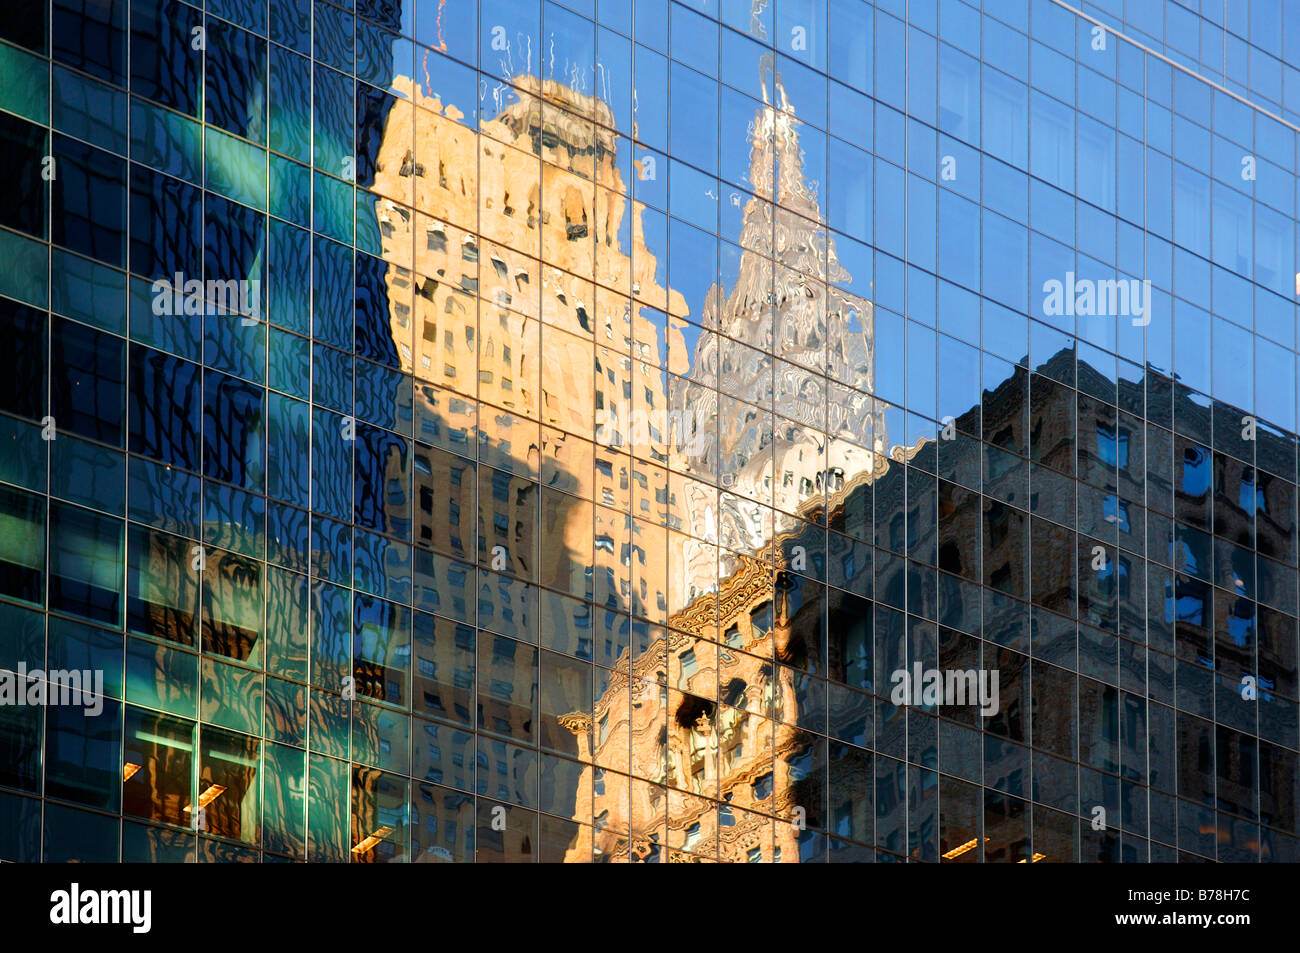 Reflet dans la façade en verre d'un gratte-ciel, New York City, USA Banque D'Images